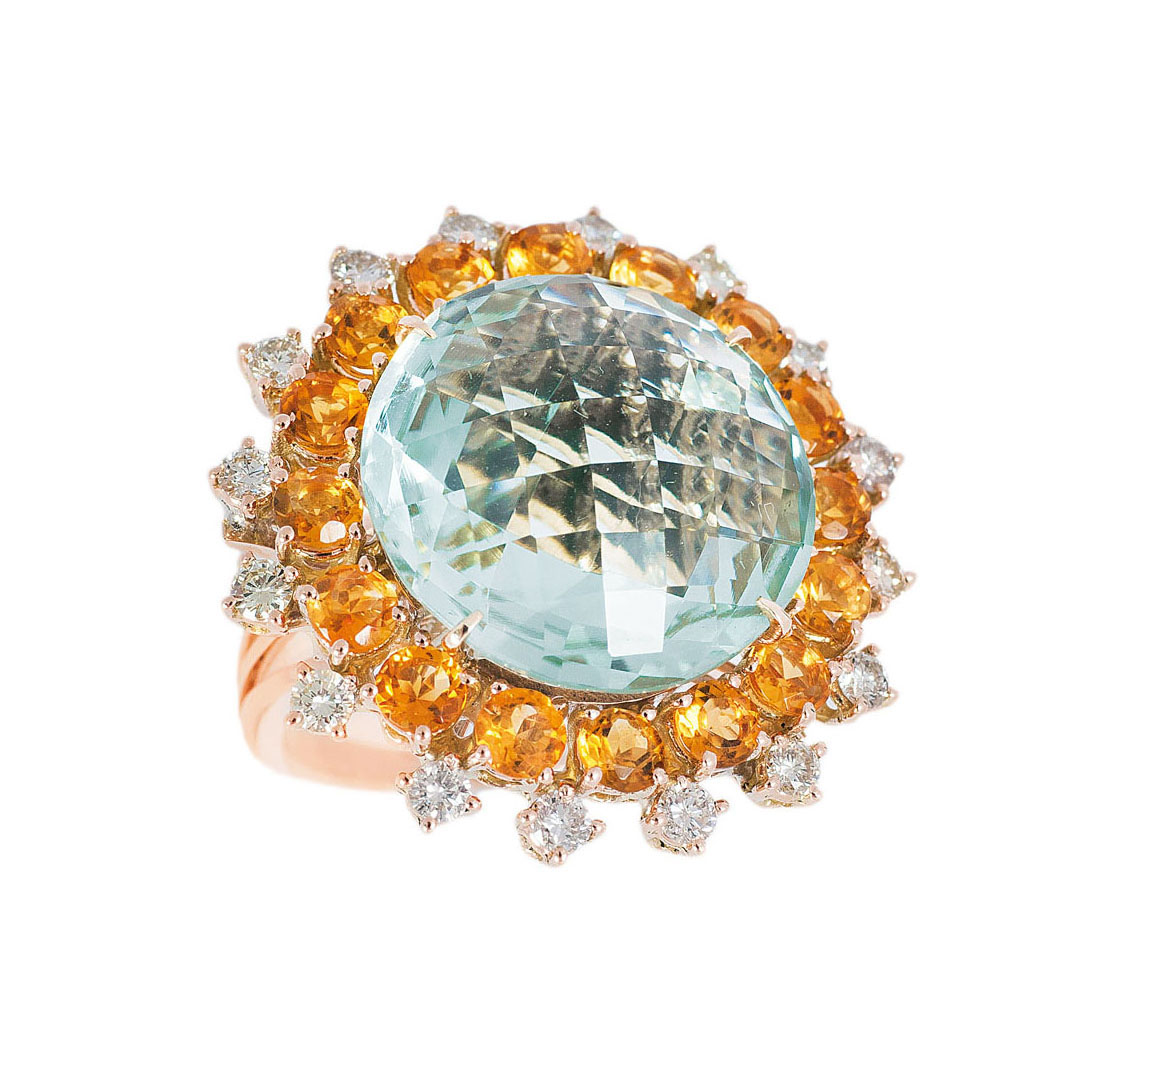 A large amethyst citrine diamond ring